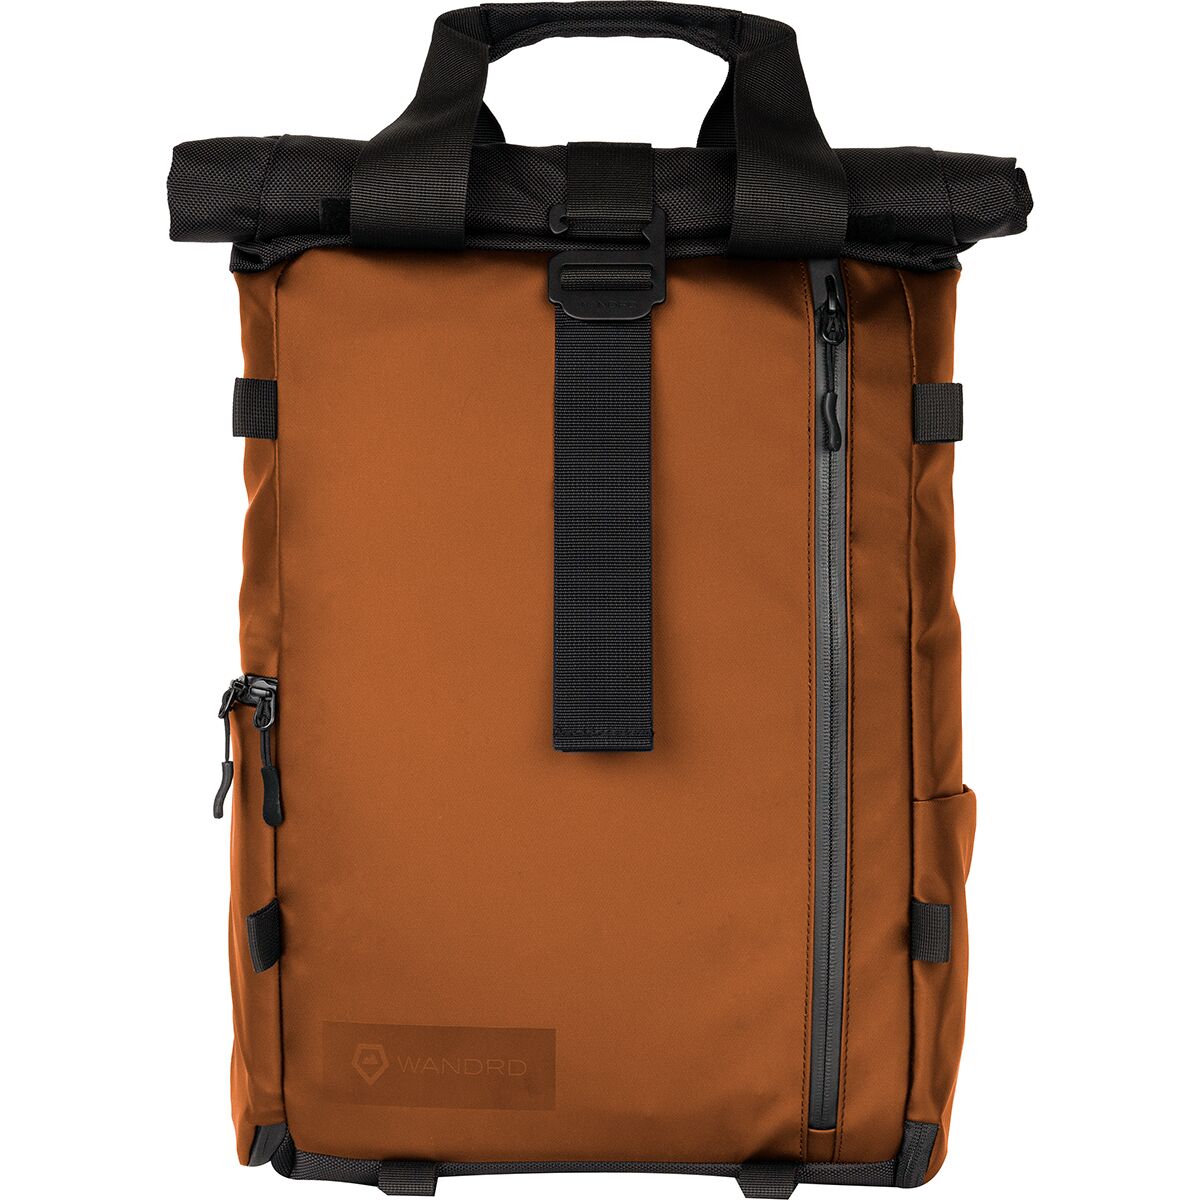 WANDRD PRVKE 11 Lite Backpack